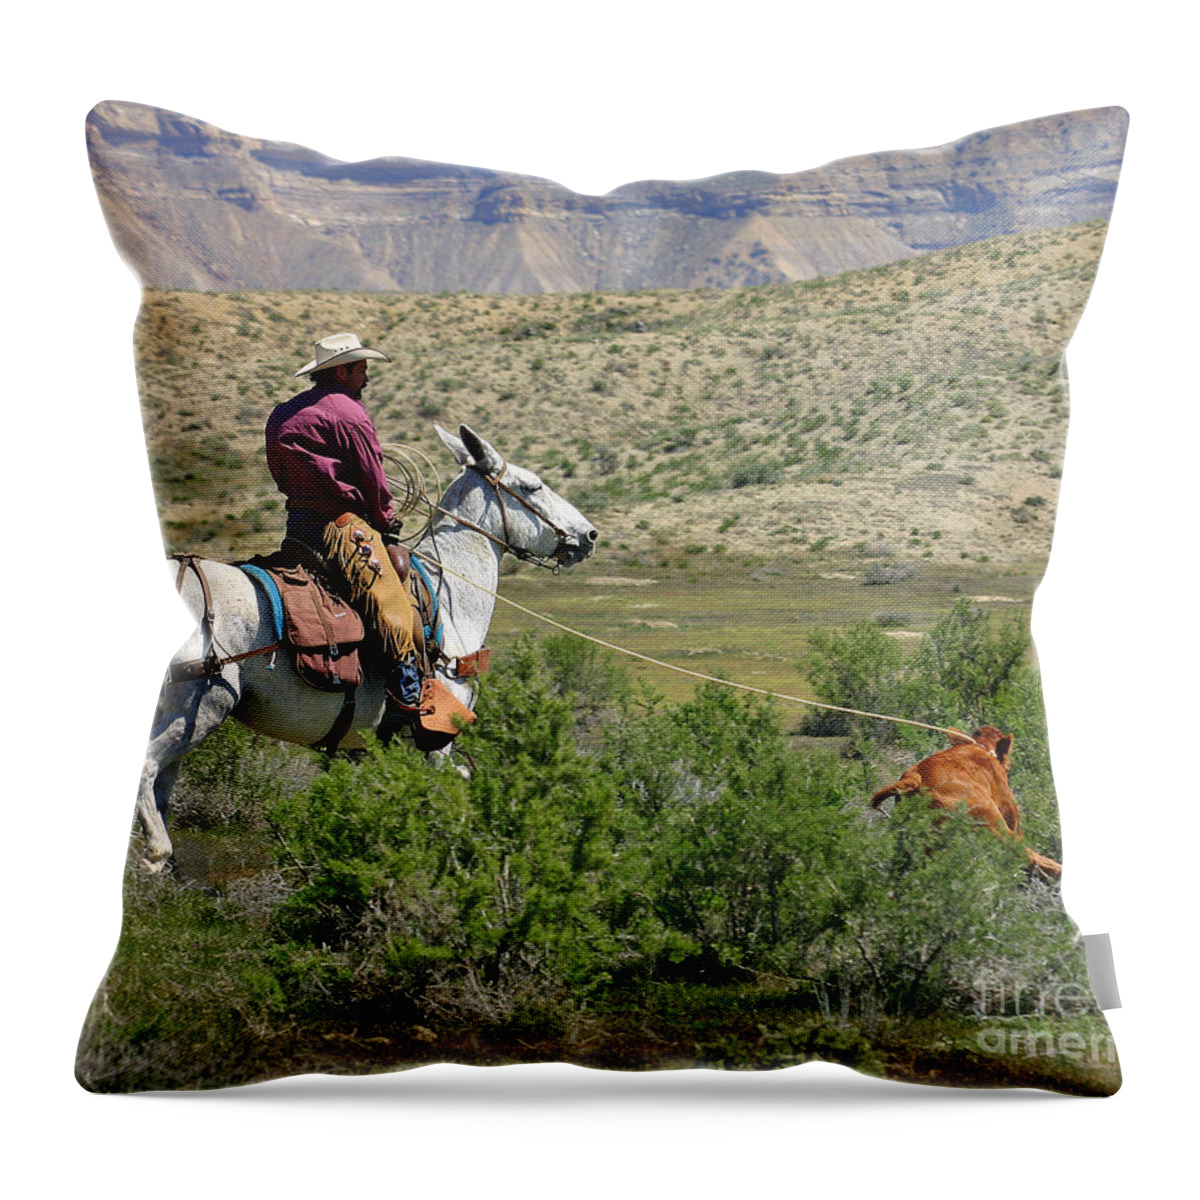 Colorado Throw Pillow featuring the photograph Gotcha' by Bob Hislop